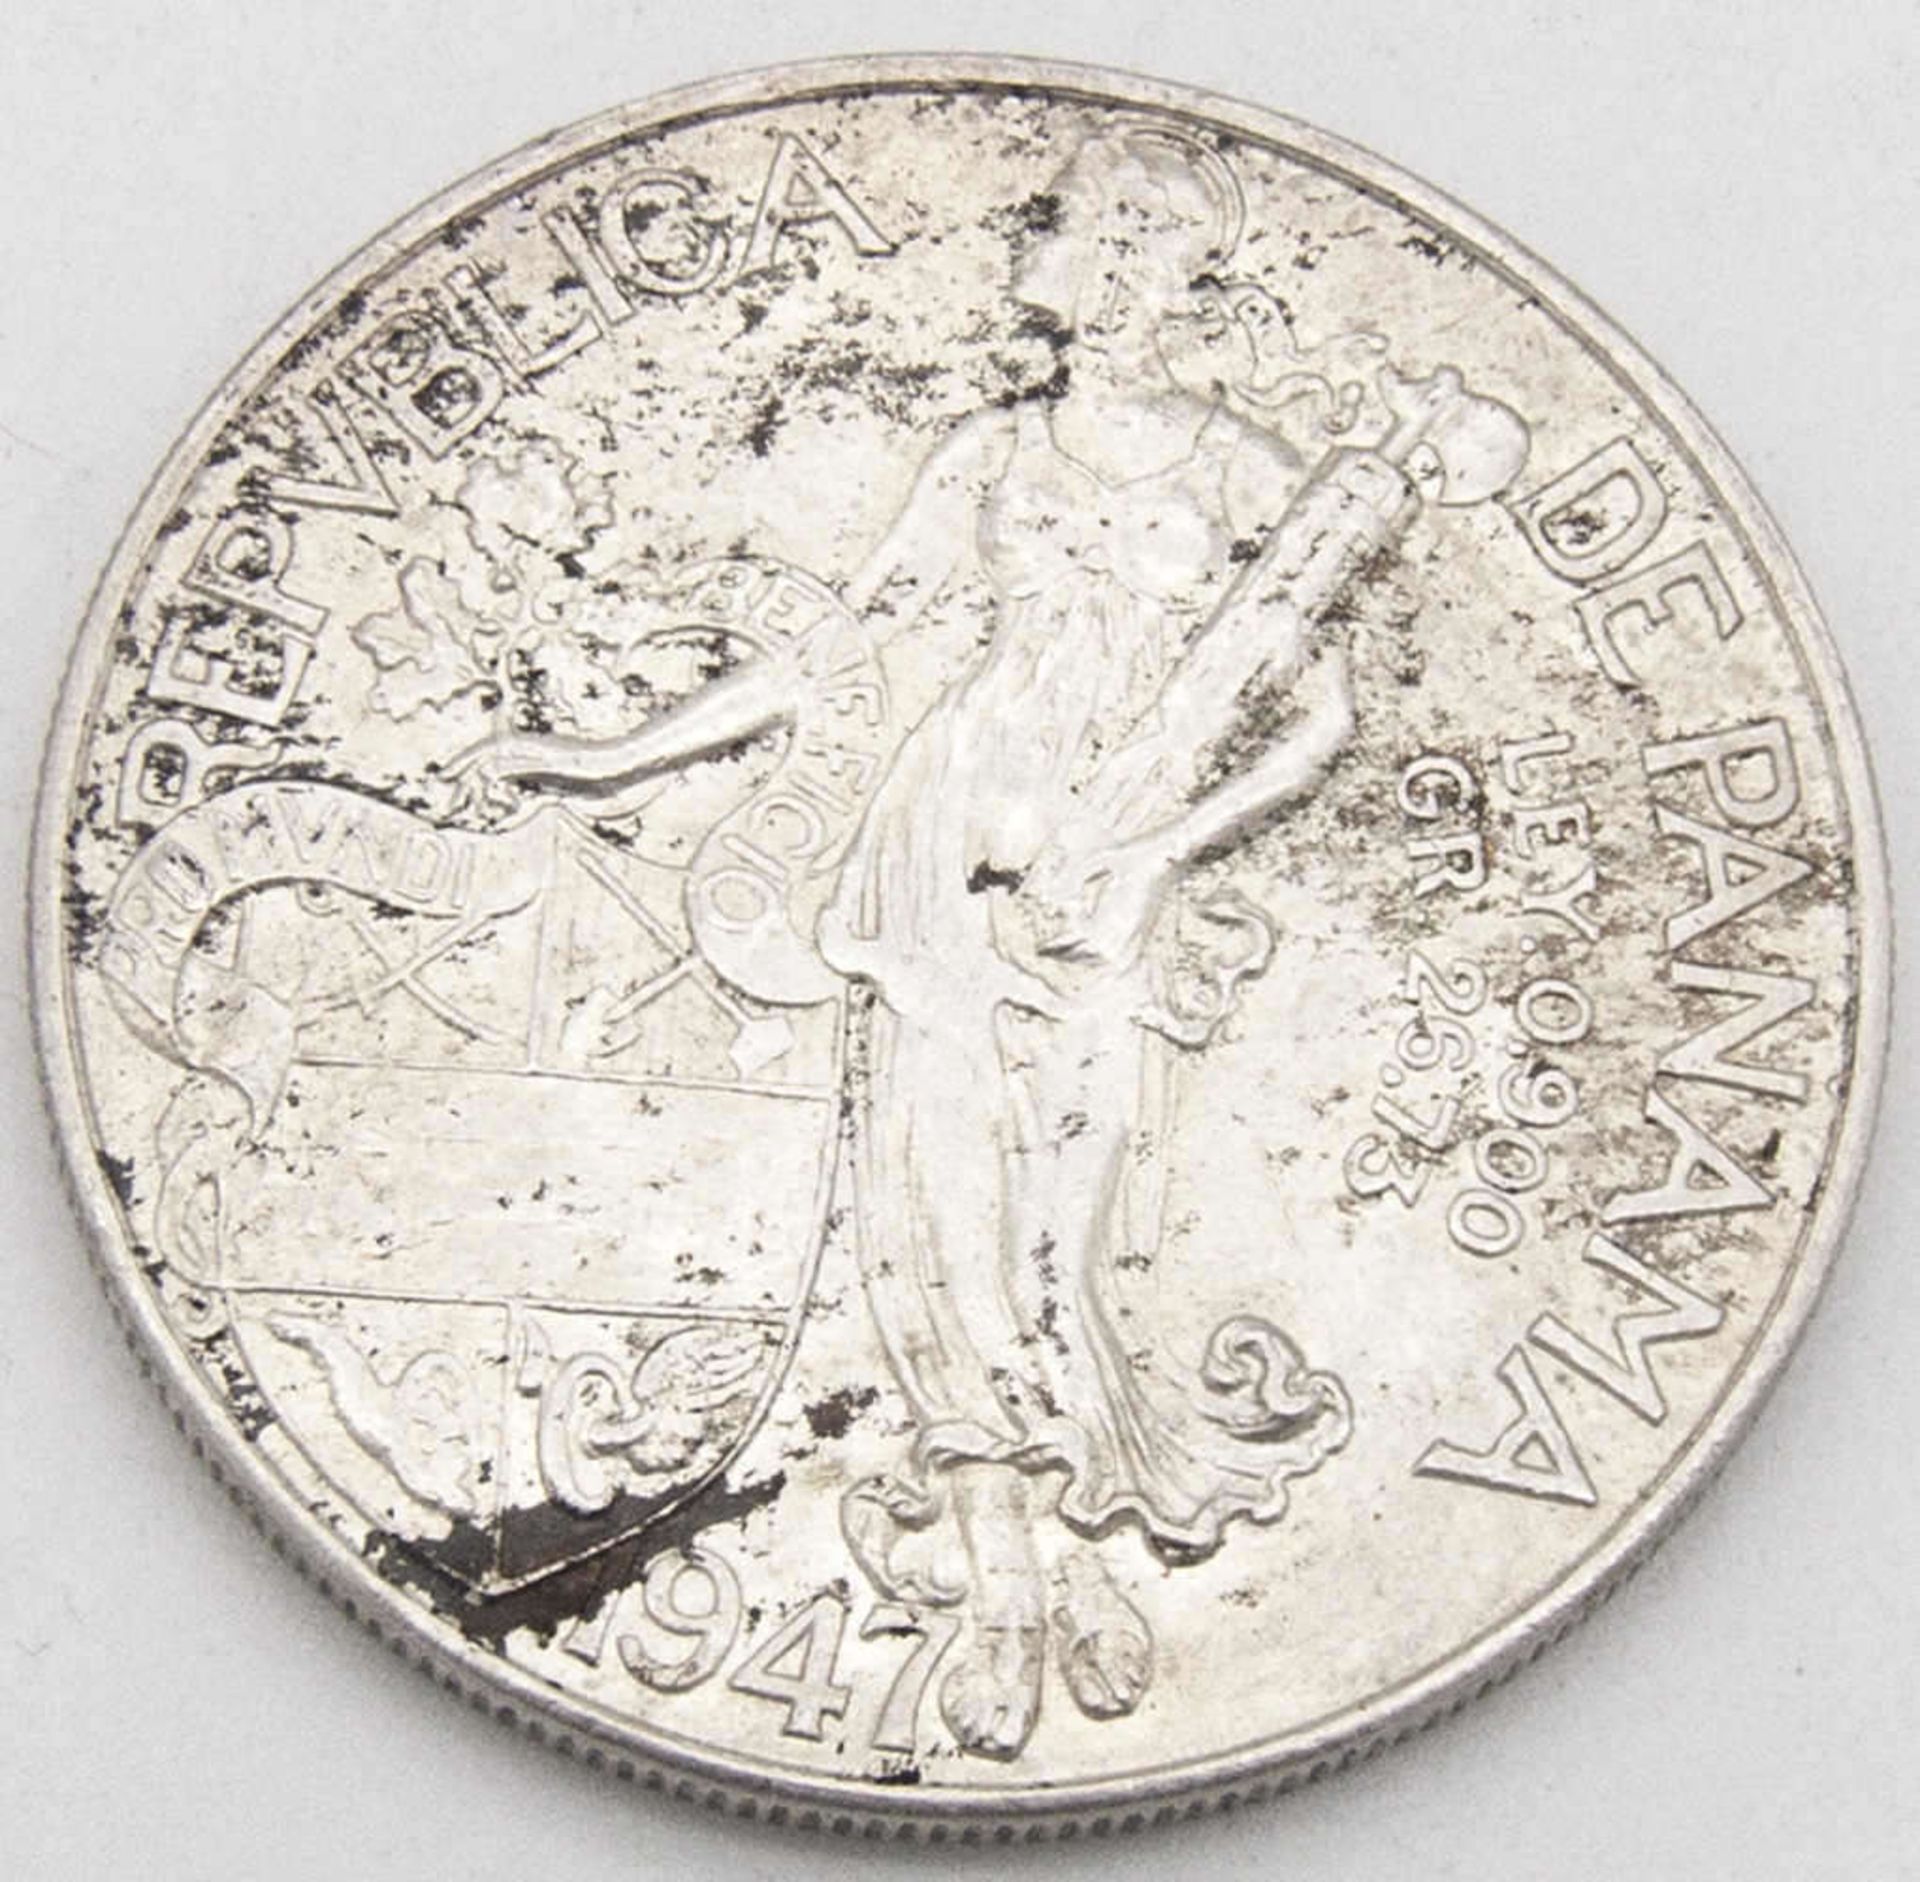 Panama 1947, 1 Balboa - Silbermünze. Erhaltung: vz.Panama 1947, 1 Balboa - silver coin. Condition: - Bild 2 aus 2